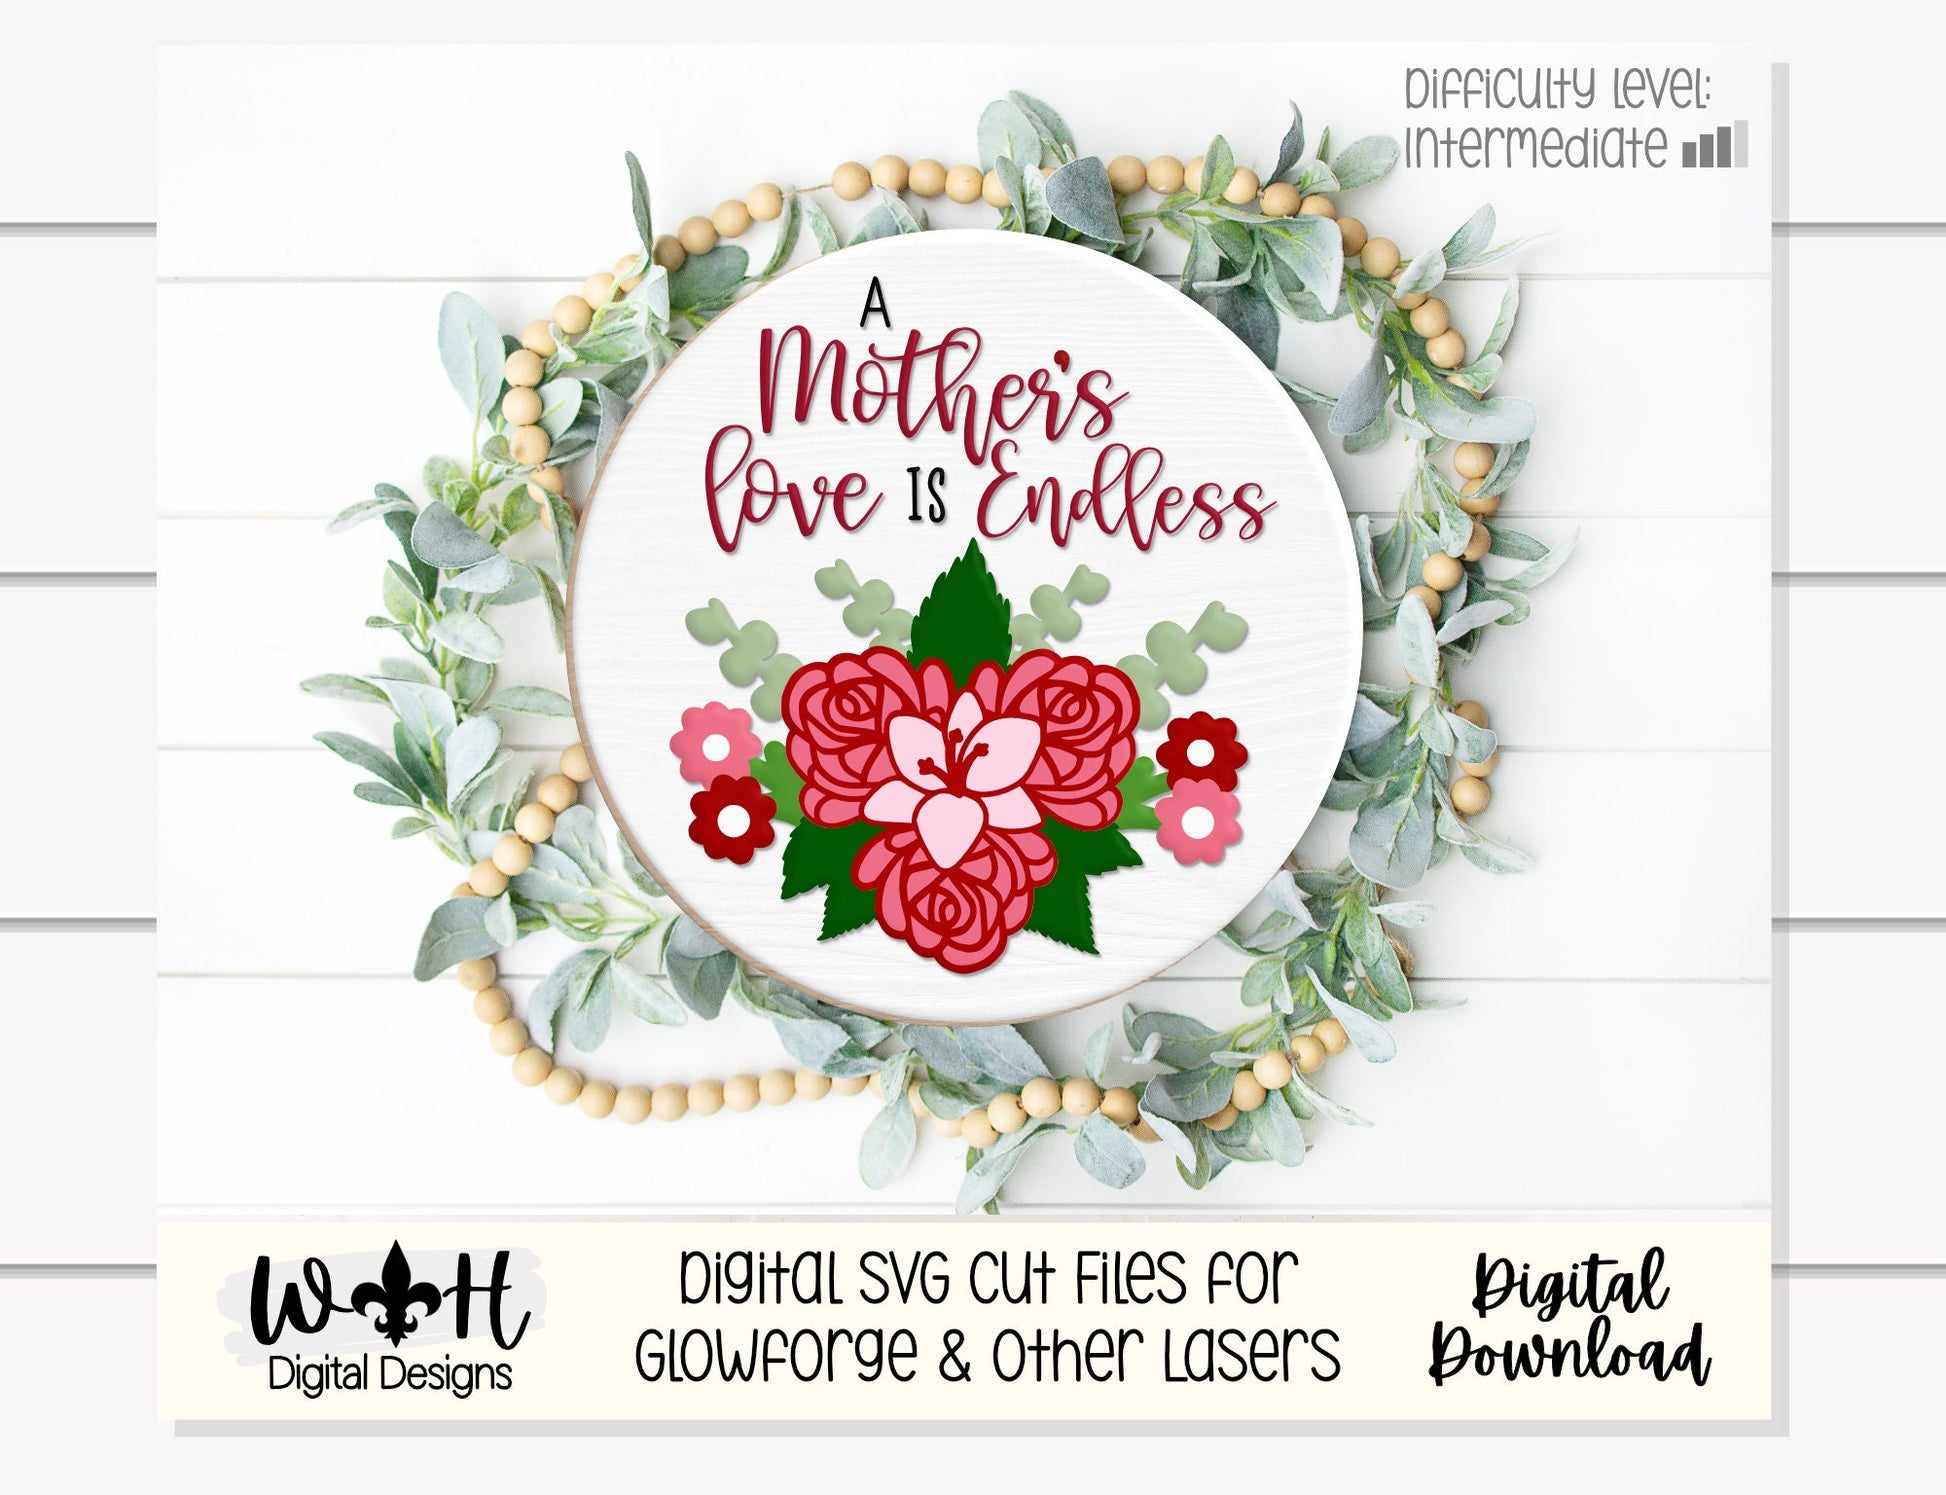 Mother's Day Lily Rose Bouquet Floral Door Hanger - Spring Sign Making and DIY Kits - Cut File For Glowforge Laser - Digital SVG File